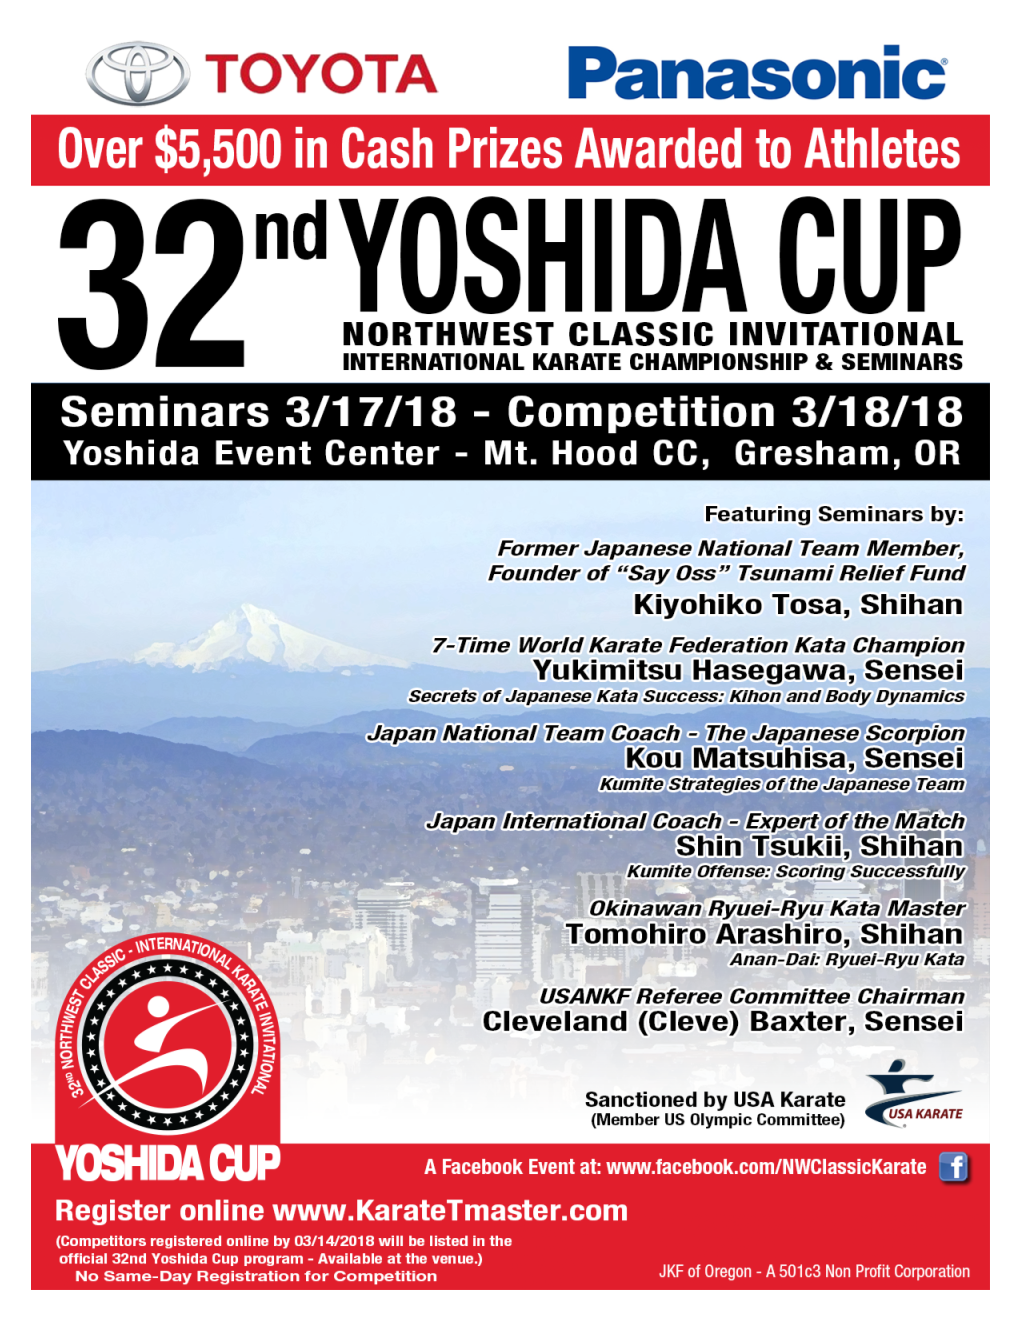 Junki Yoshida Sensei Tournament Director and Host of the Yoshida Cup Northwest Classic INVITATIONAL International Karate Championship & Seminars